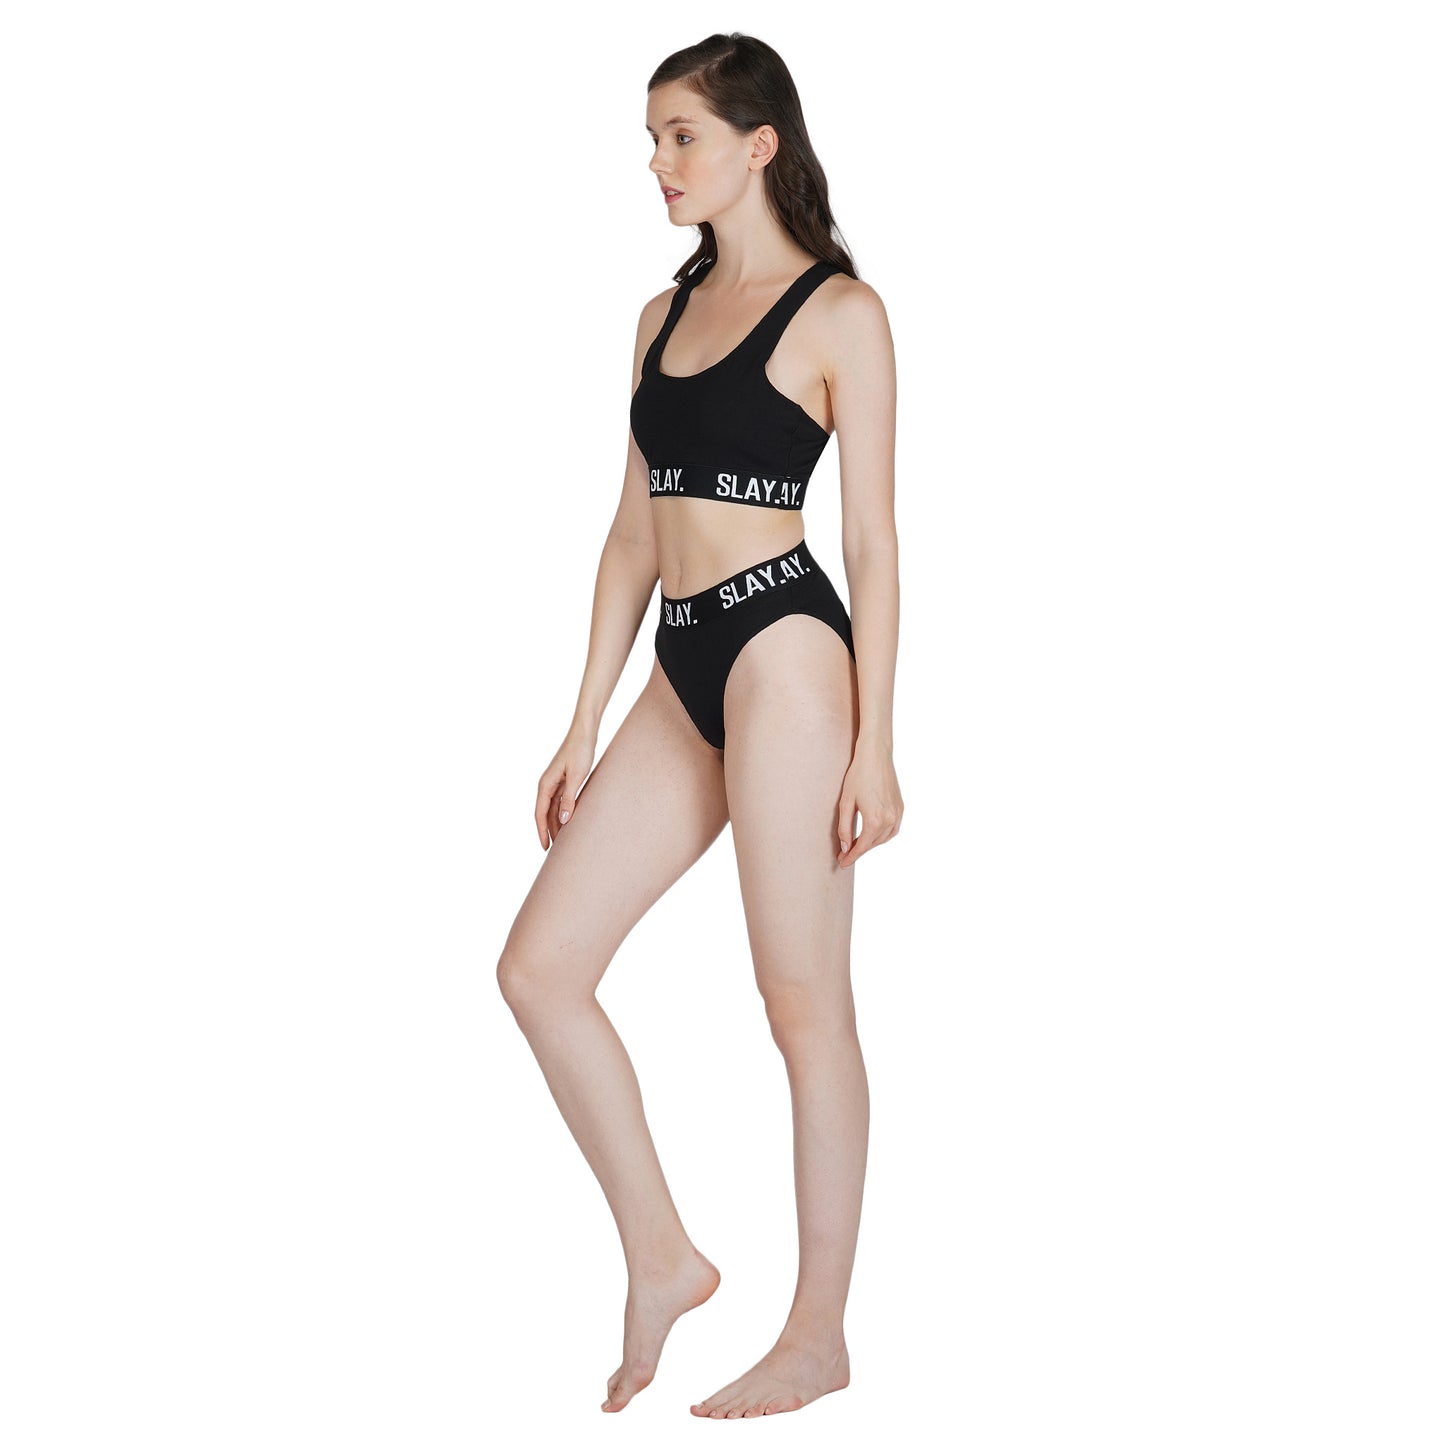 SLAY. Women's Underwear Lingerie Modern Sports Bra and Panty Co-ord Set Black